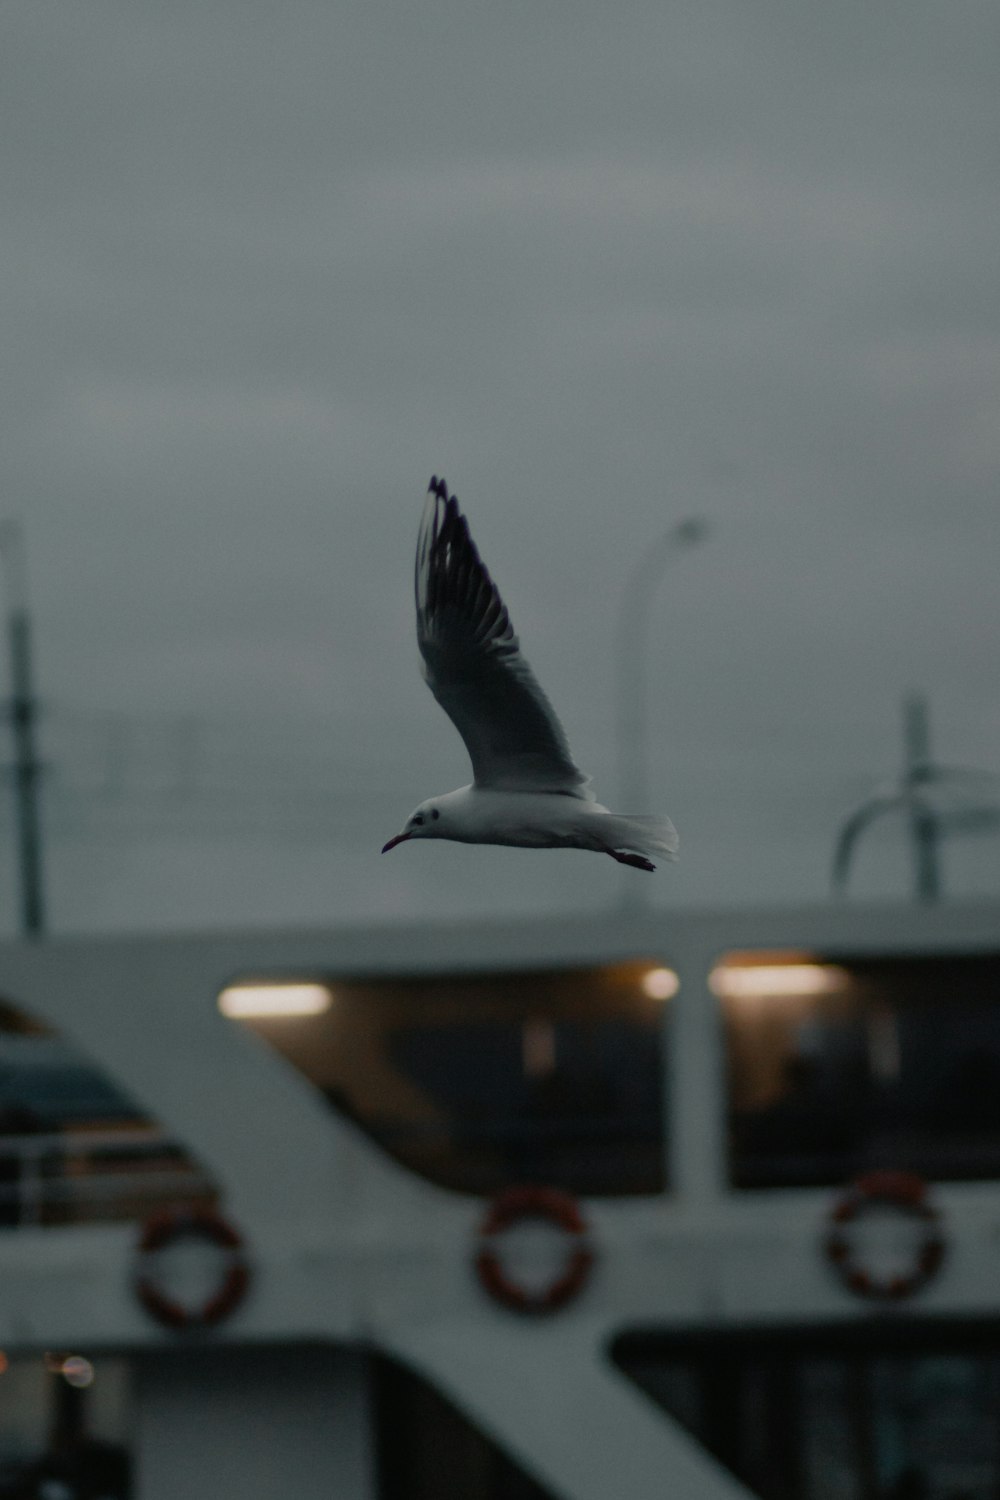 white and black bird flying during daytime